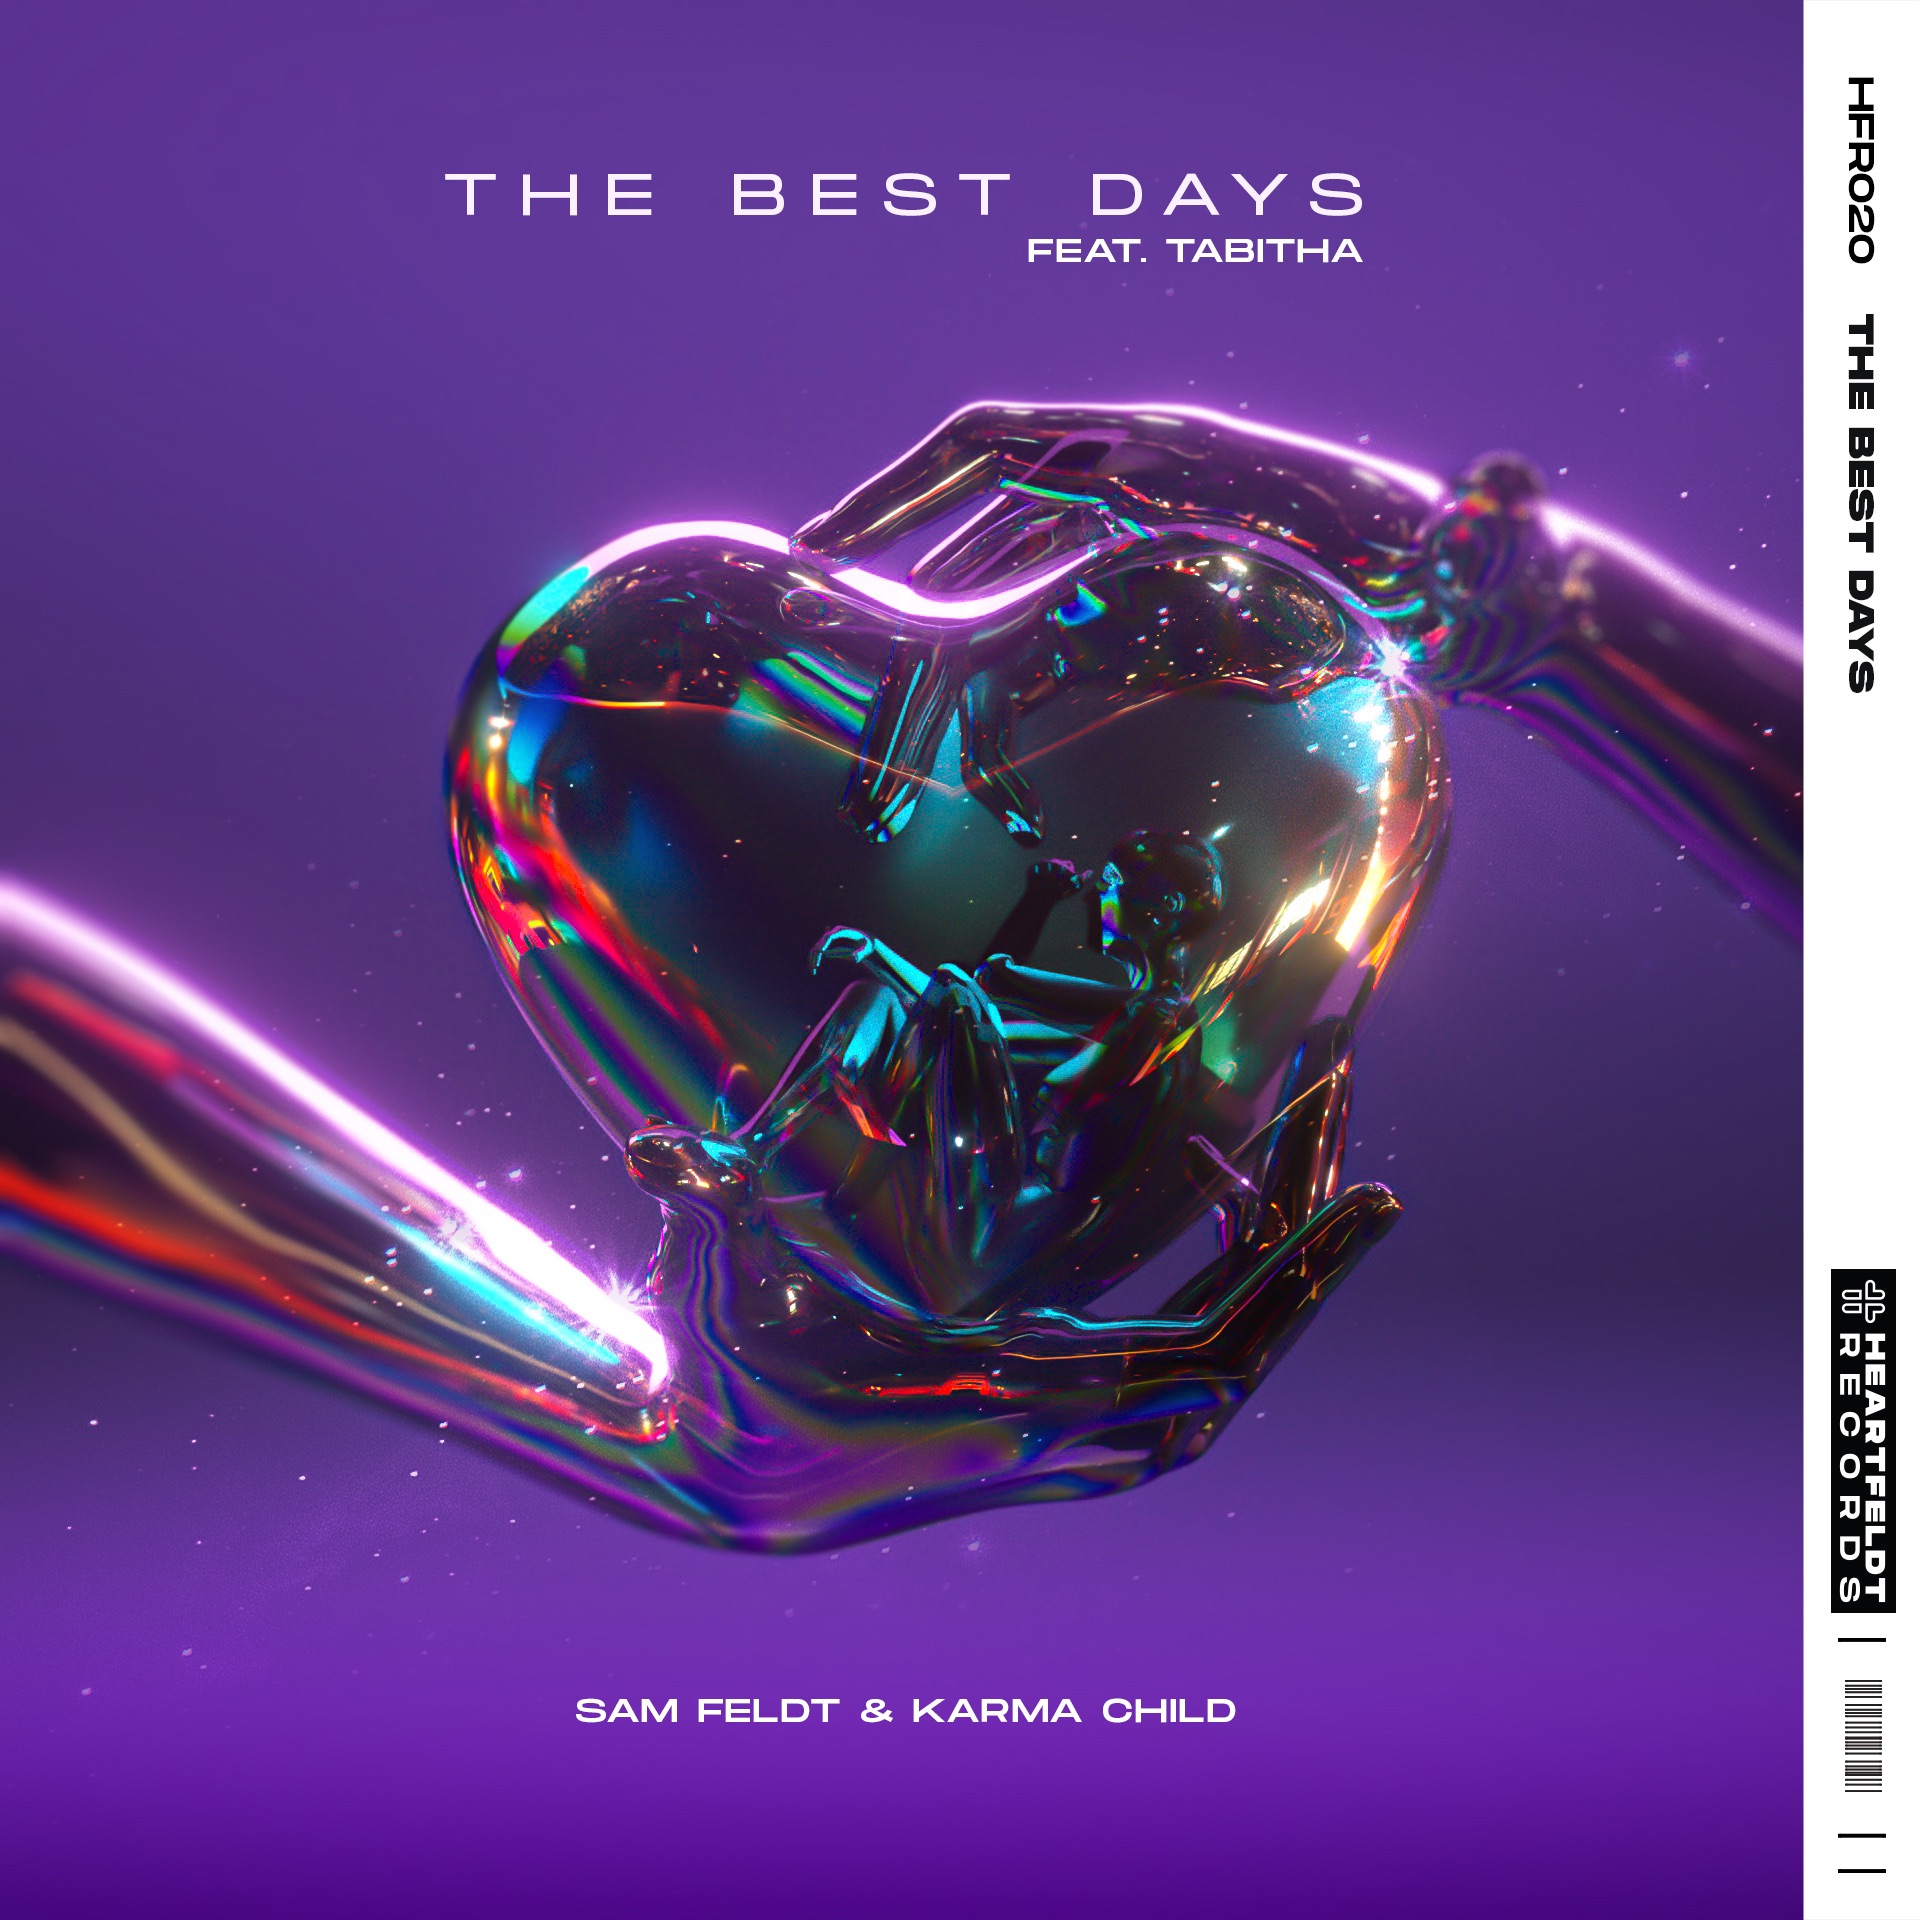 Sam Feldt & Karma Child - The Best Days (feat. Tabitha) - Single